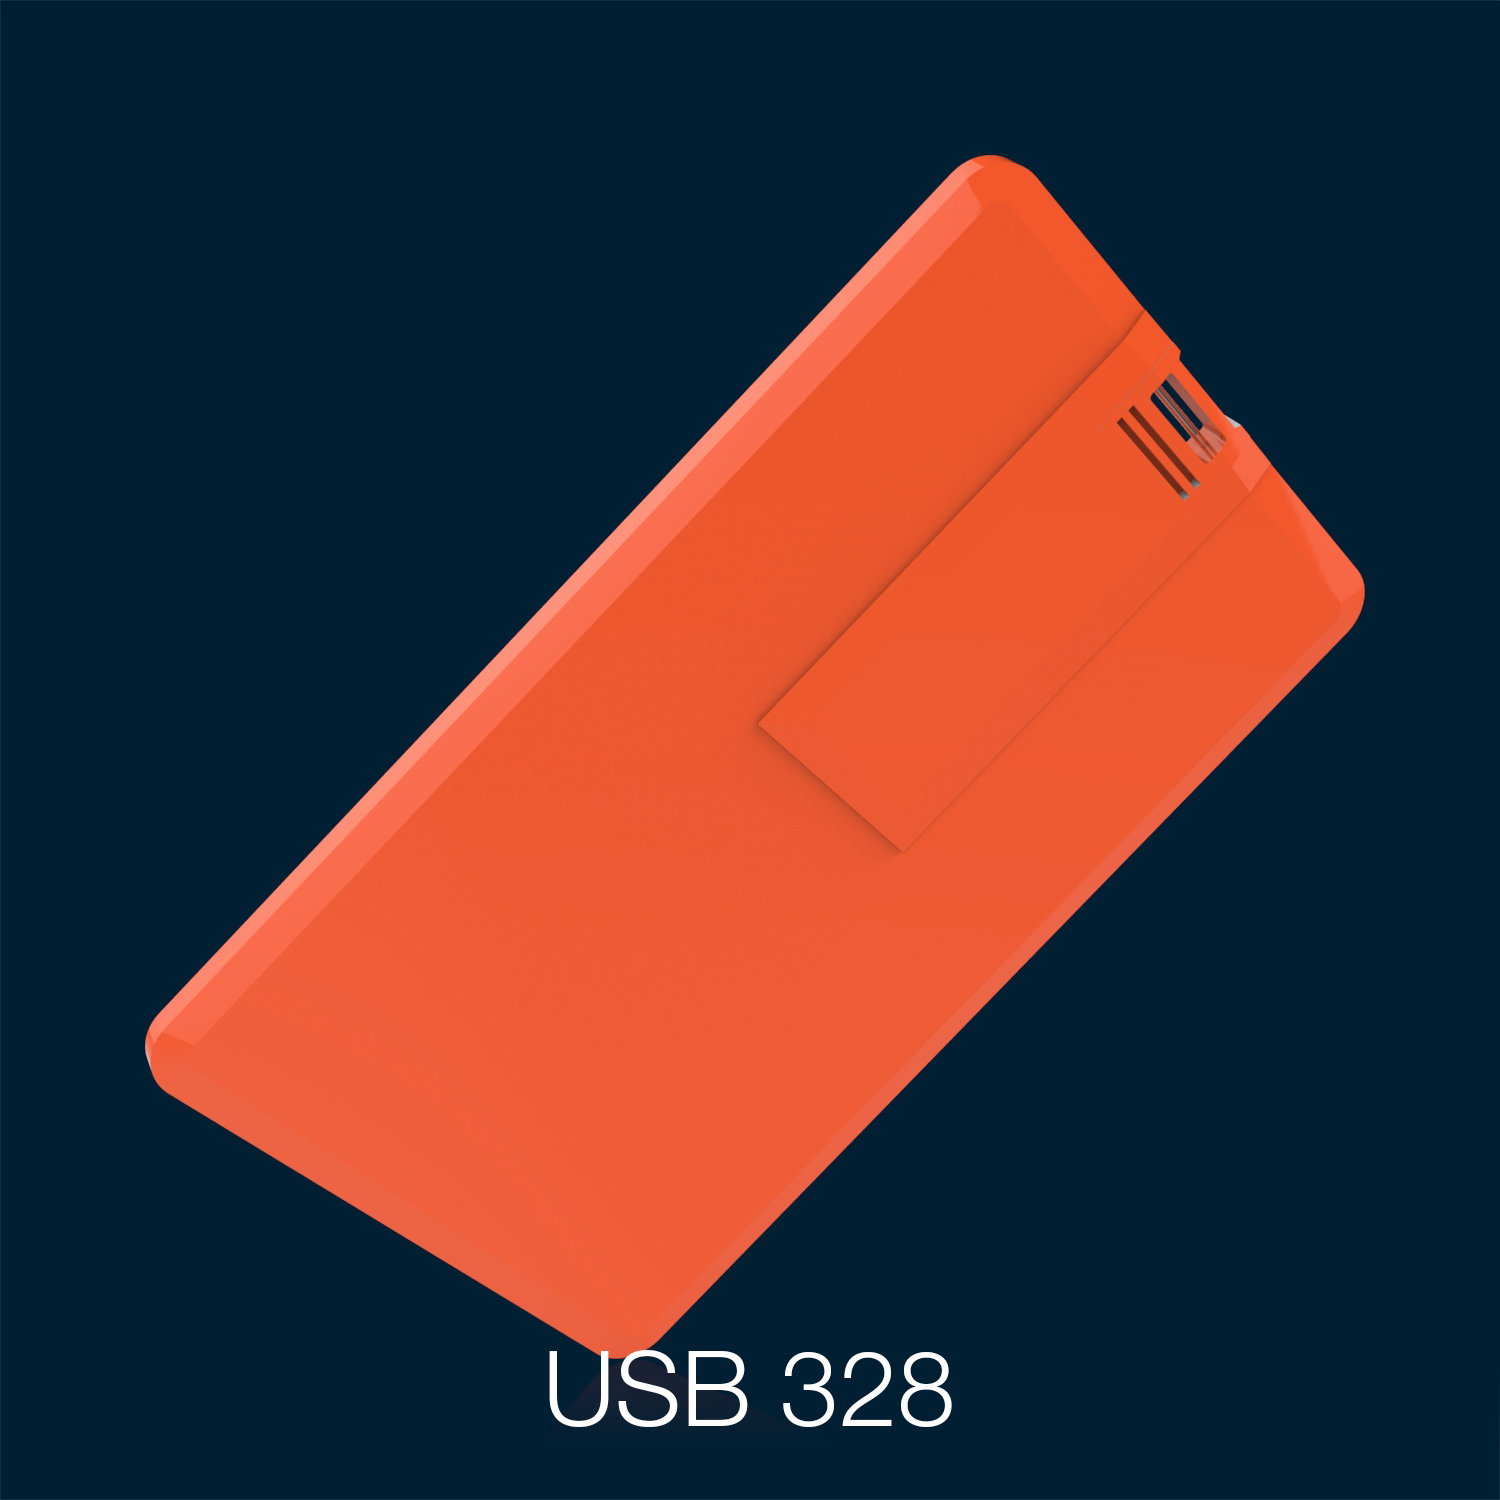 USB 328